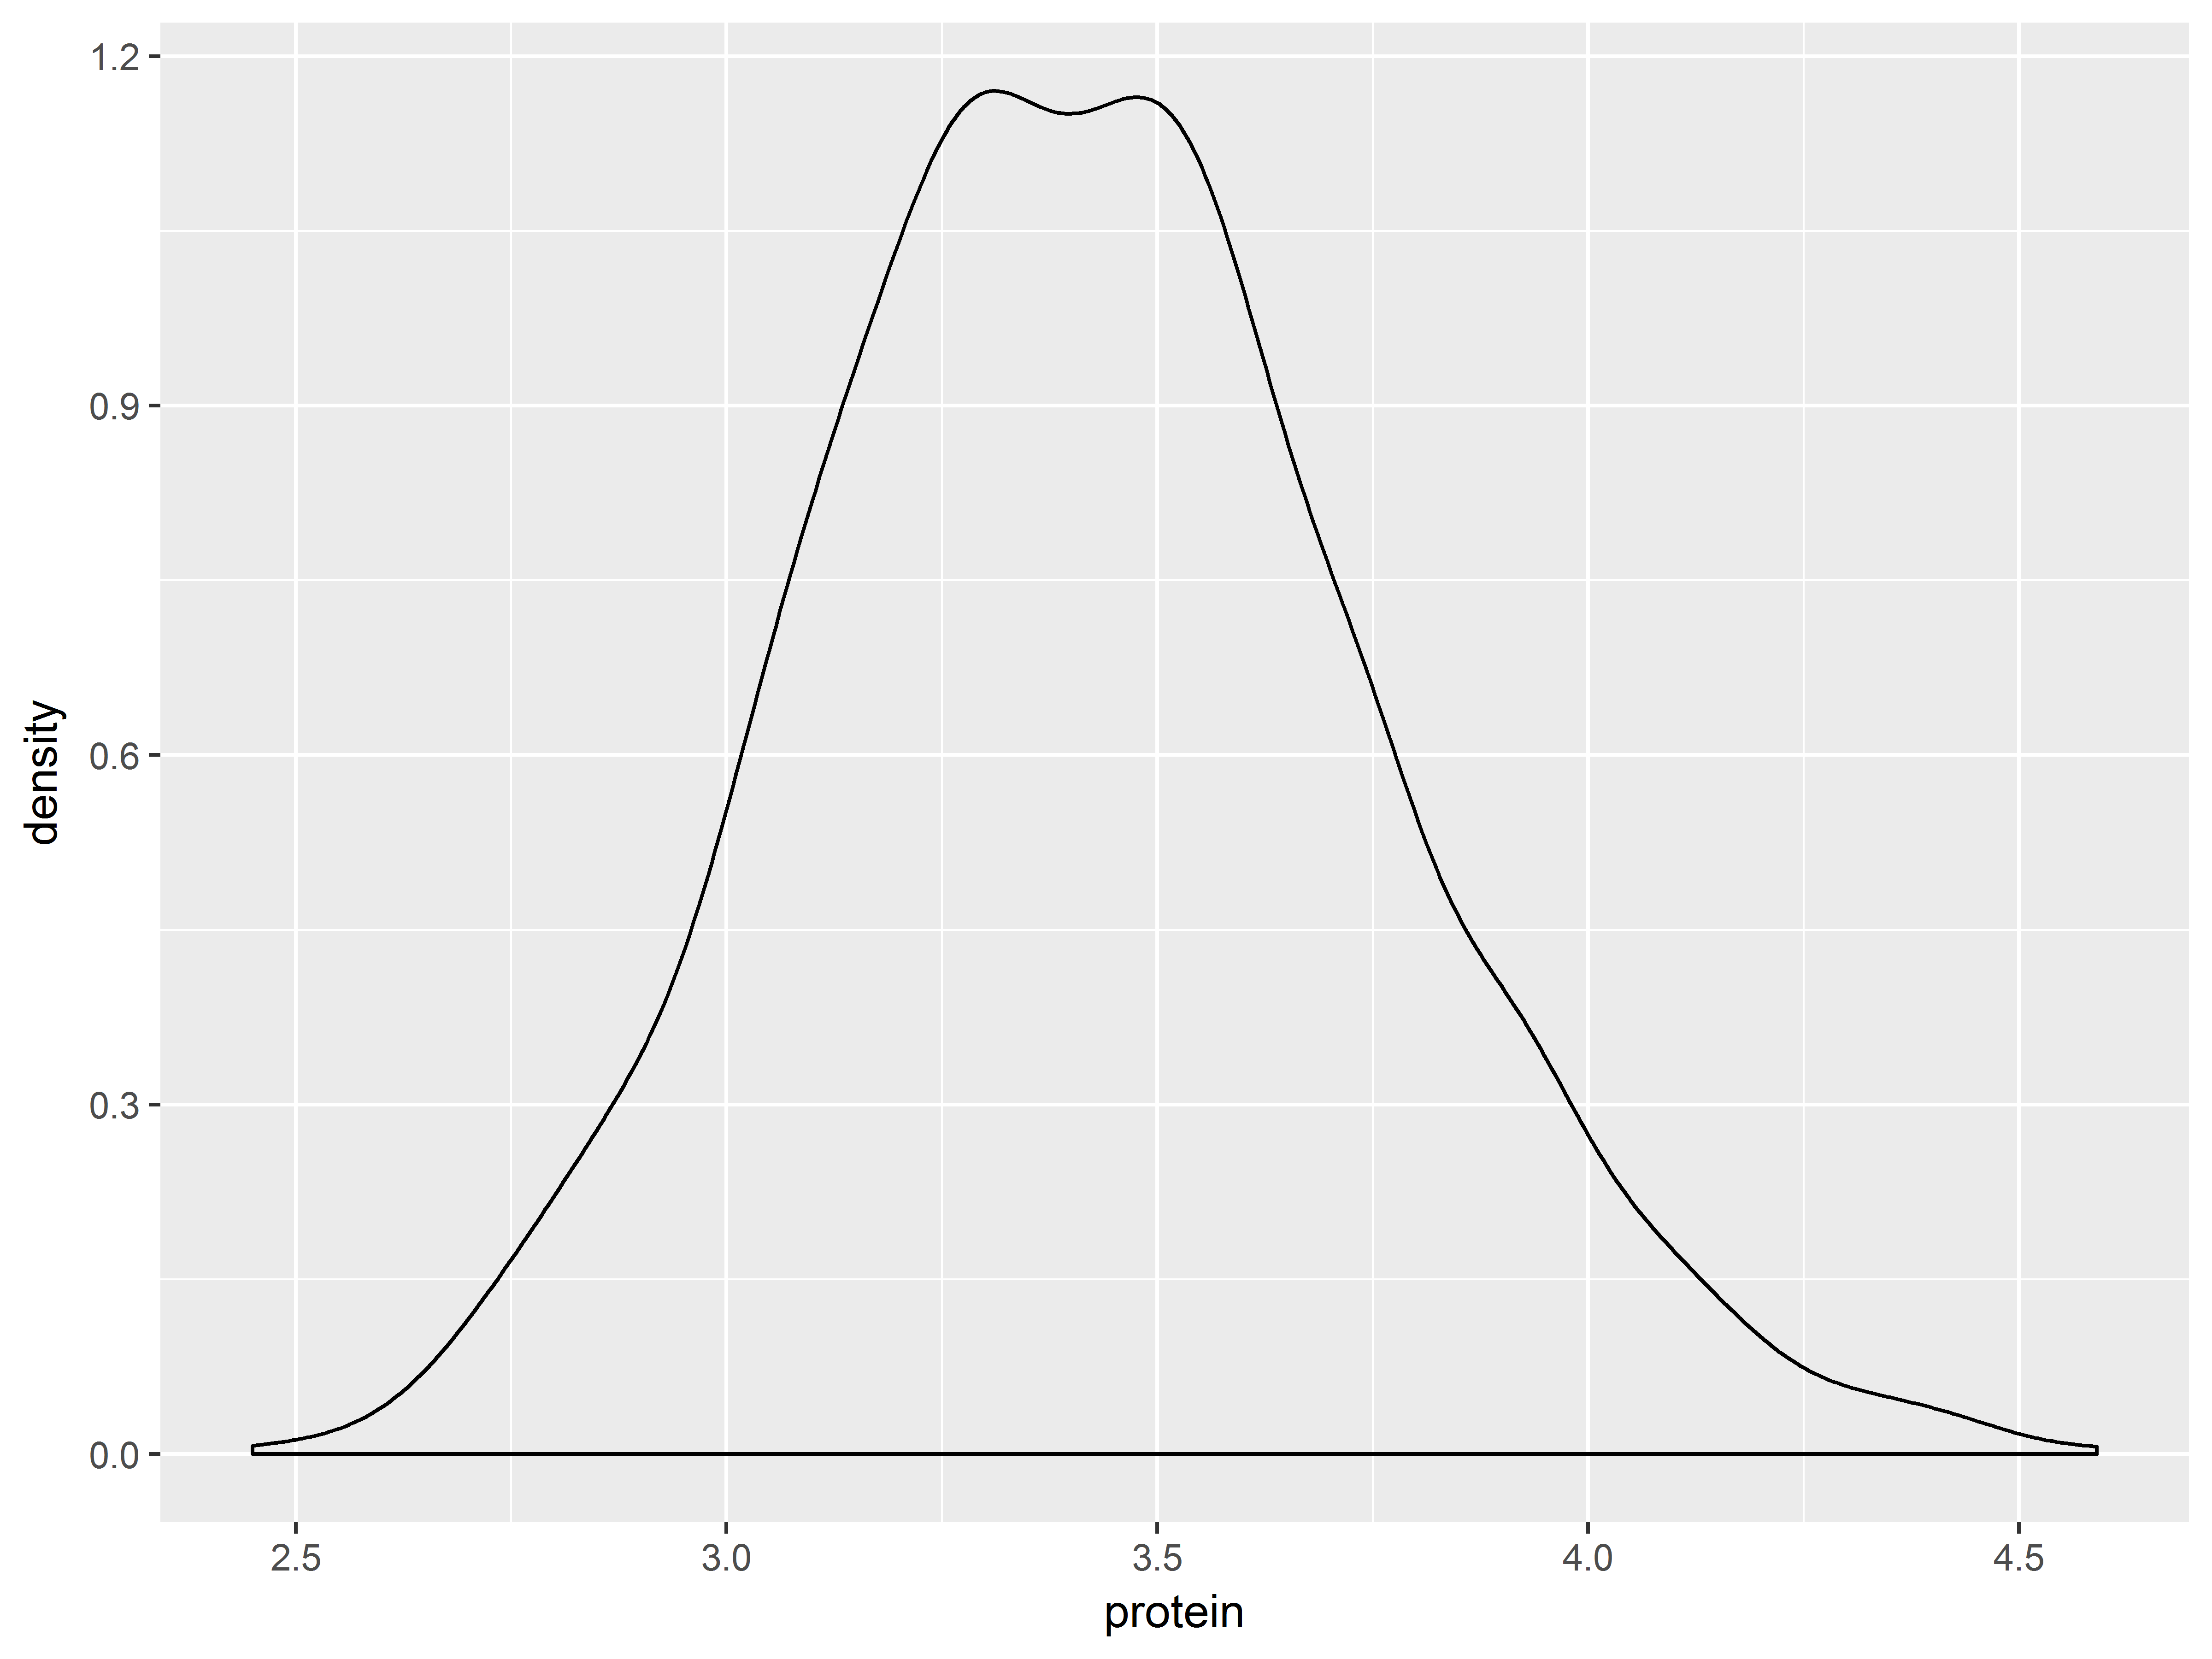 Fig 1.9 density plot of protein